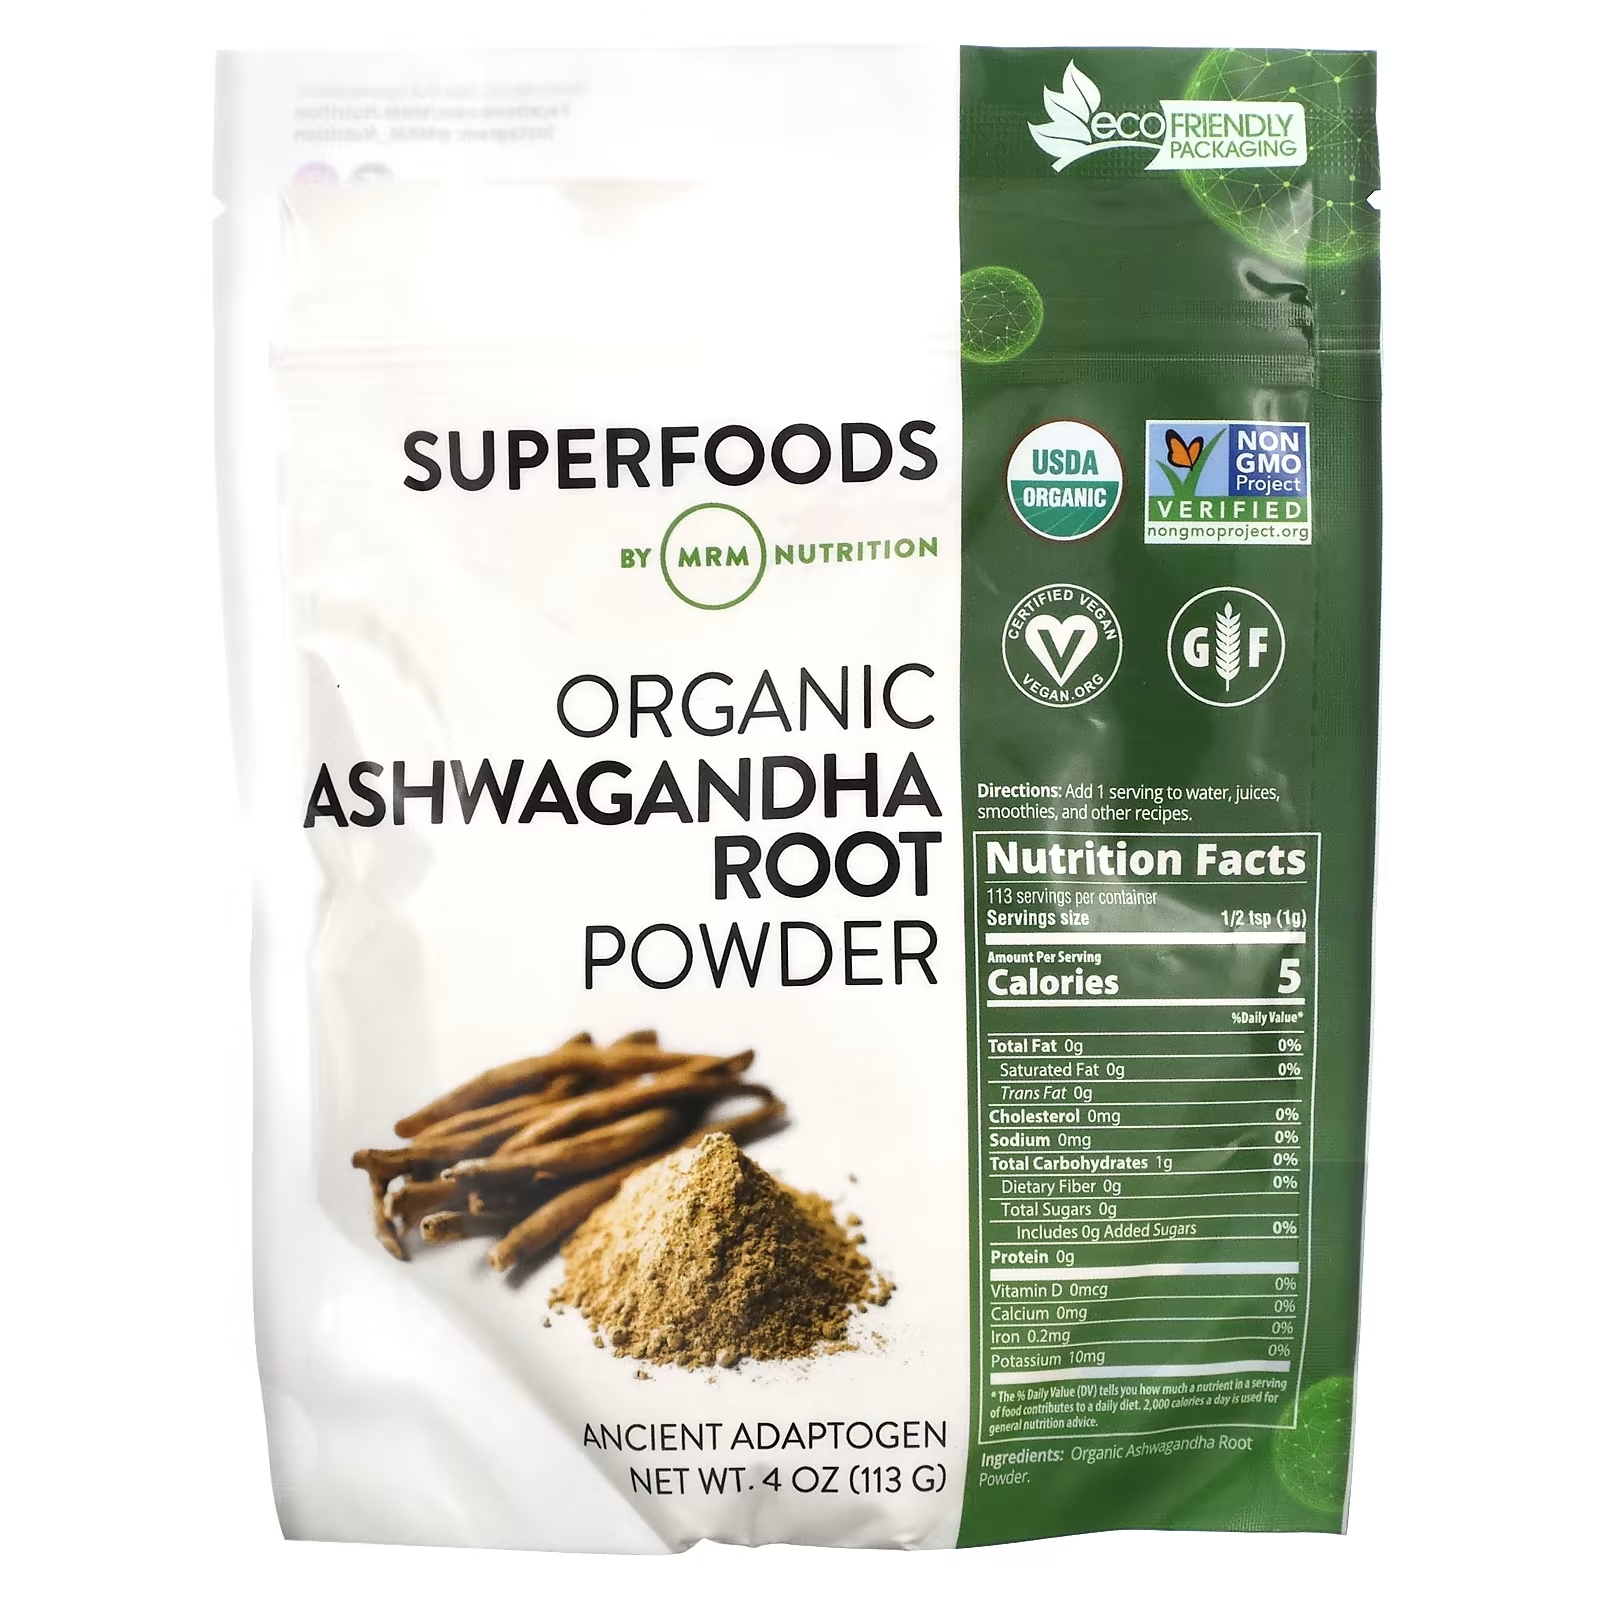 MRM Nutrition Organic Ashwagandha Root Powder, 113 г mrm nutrition organic ceylon cinnamon powder 113 г